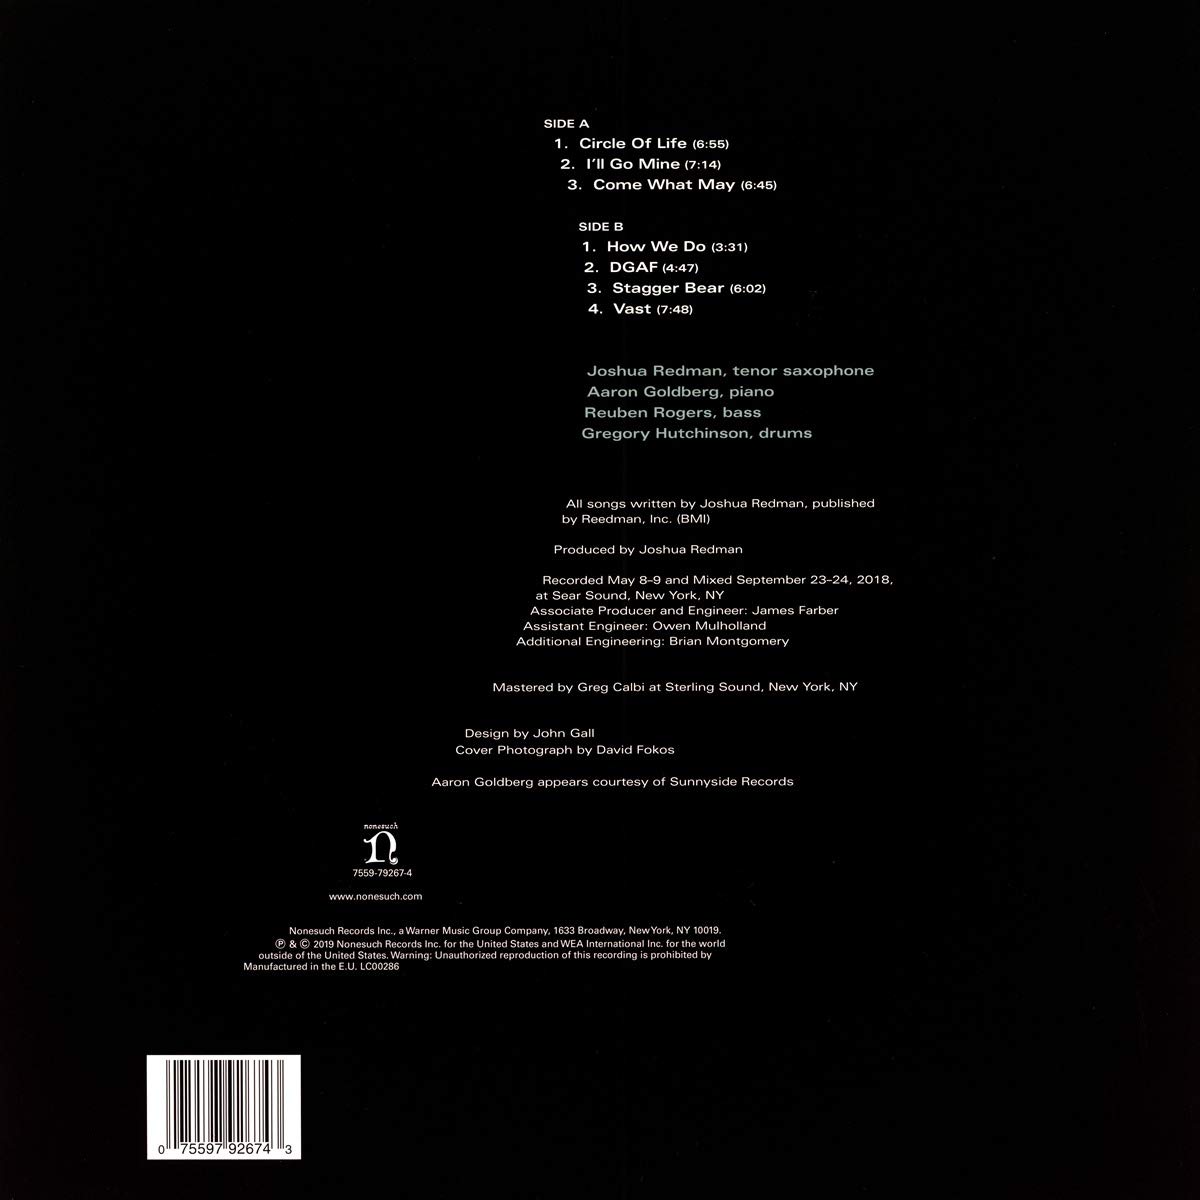 Joshua Redman Quartet (조슈아 레드맨 콰르텟) - Come What May [LP]